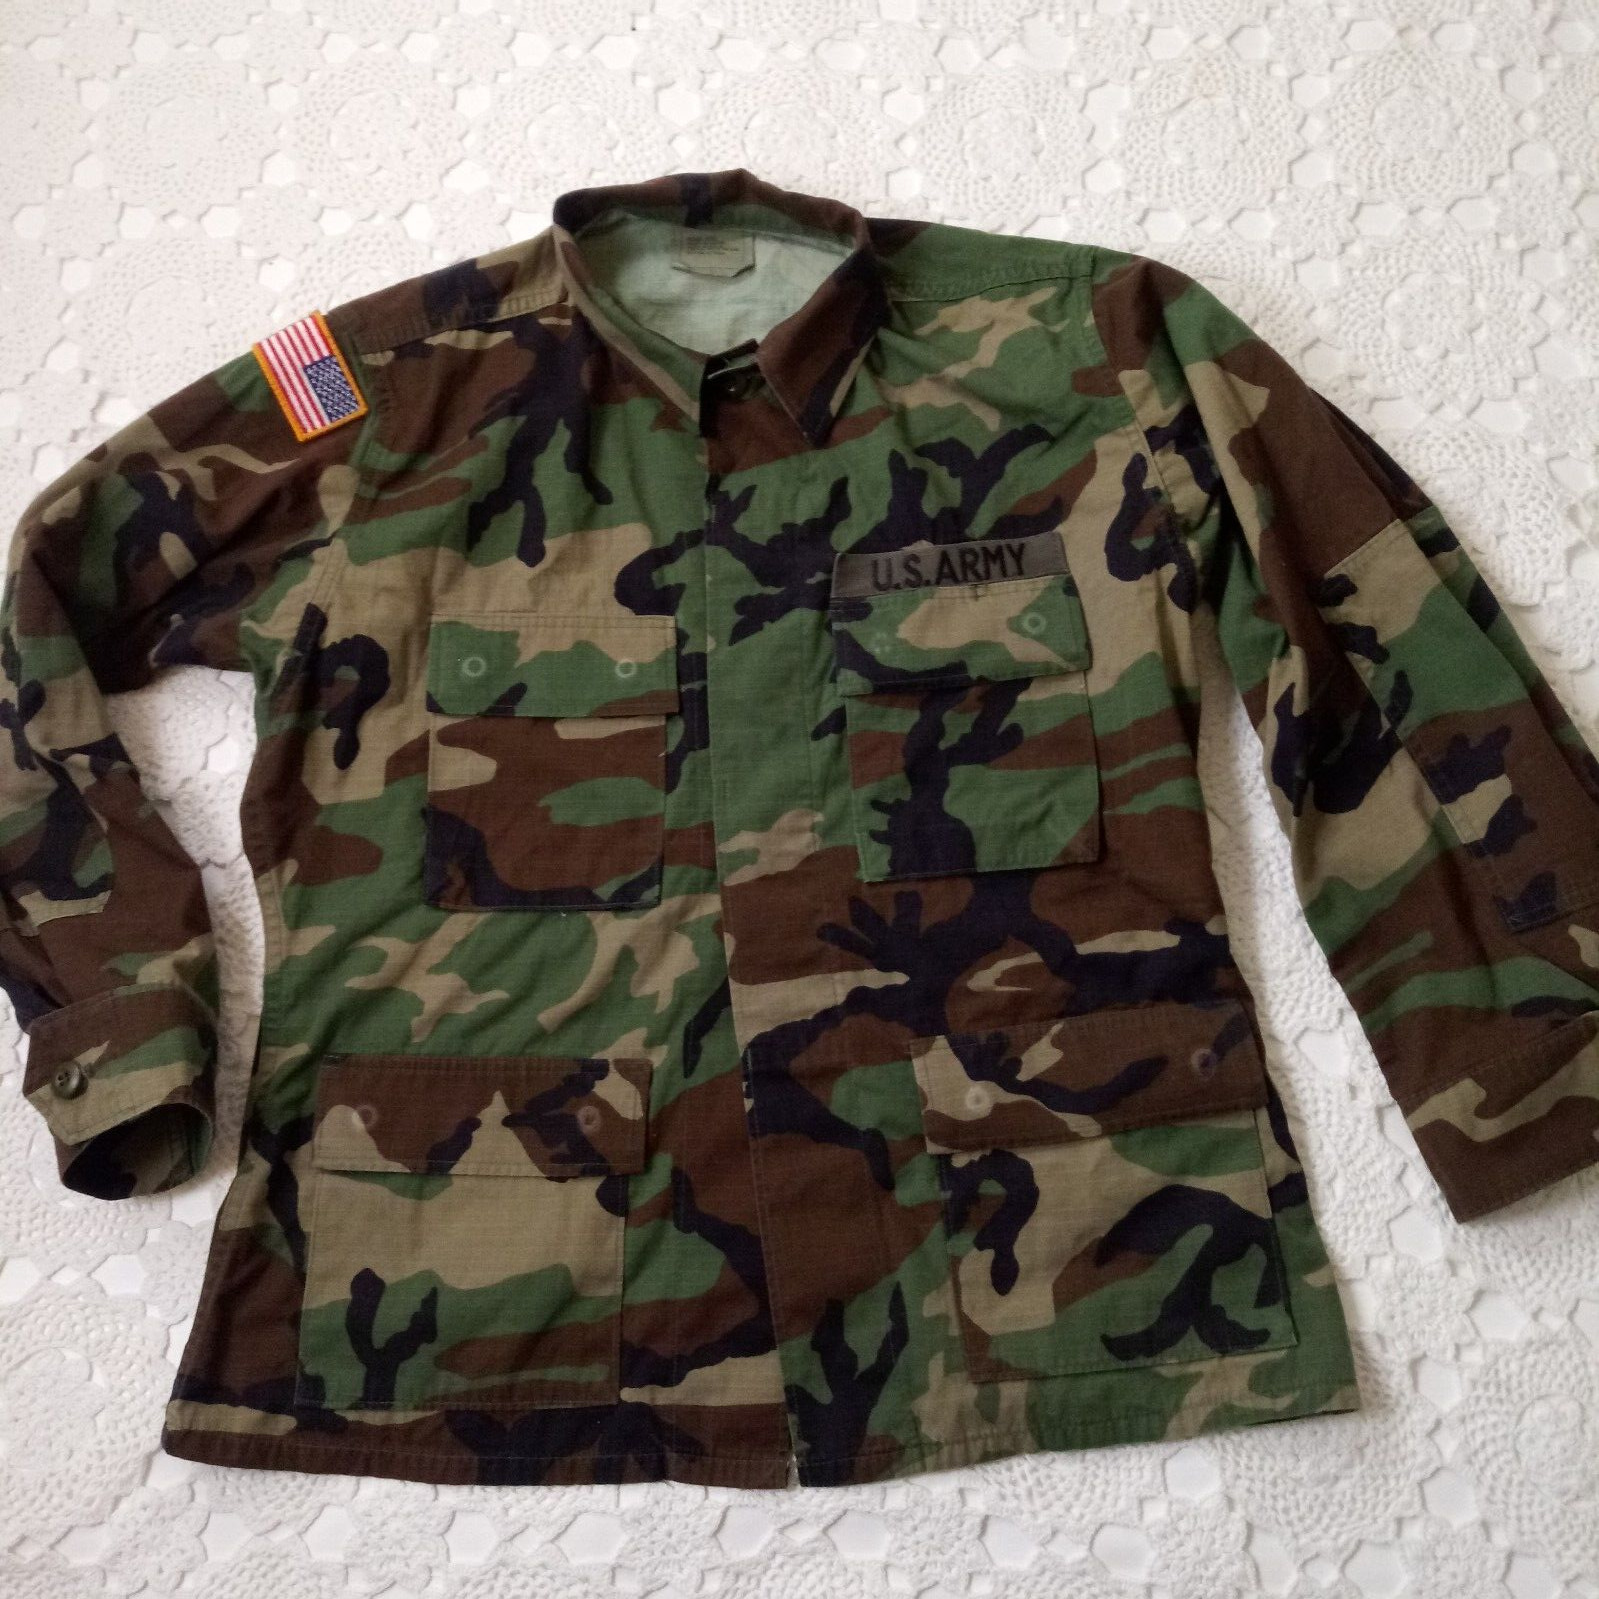 US Army Field Jacket Camouflage Green Brown Tan Cargo Pockets Medium Short Men M